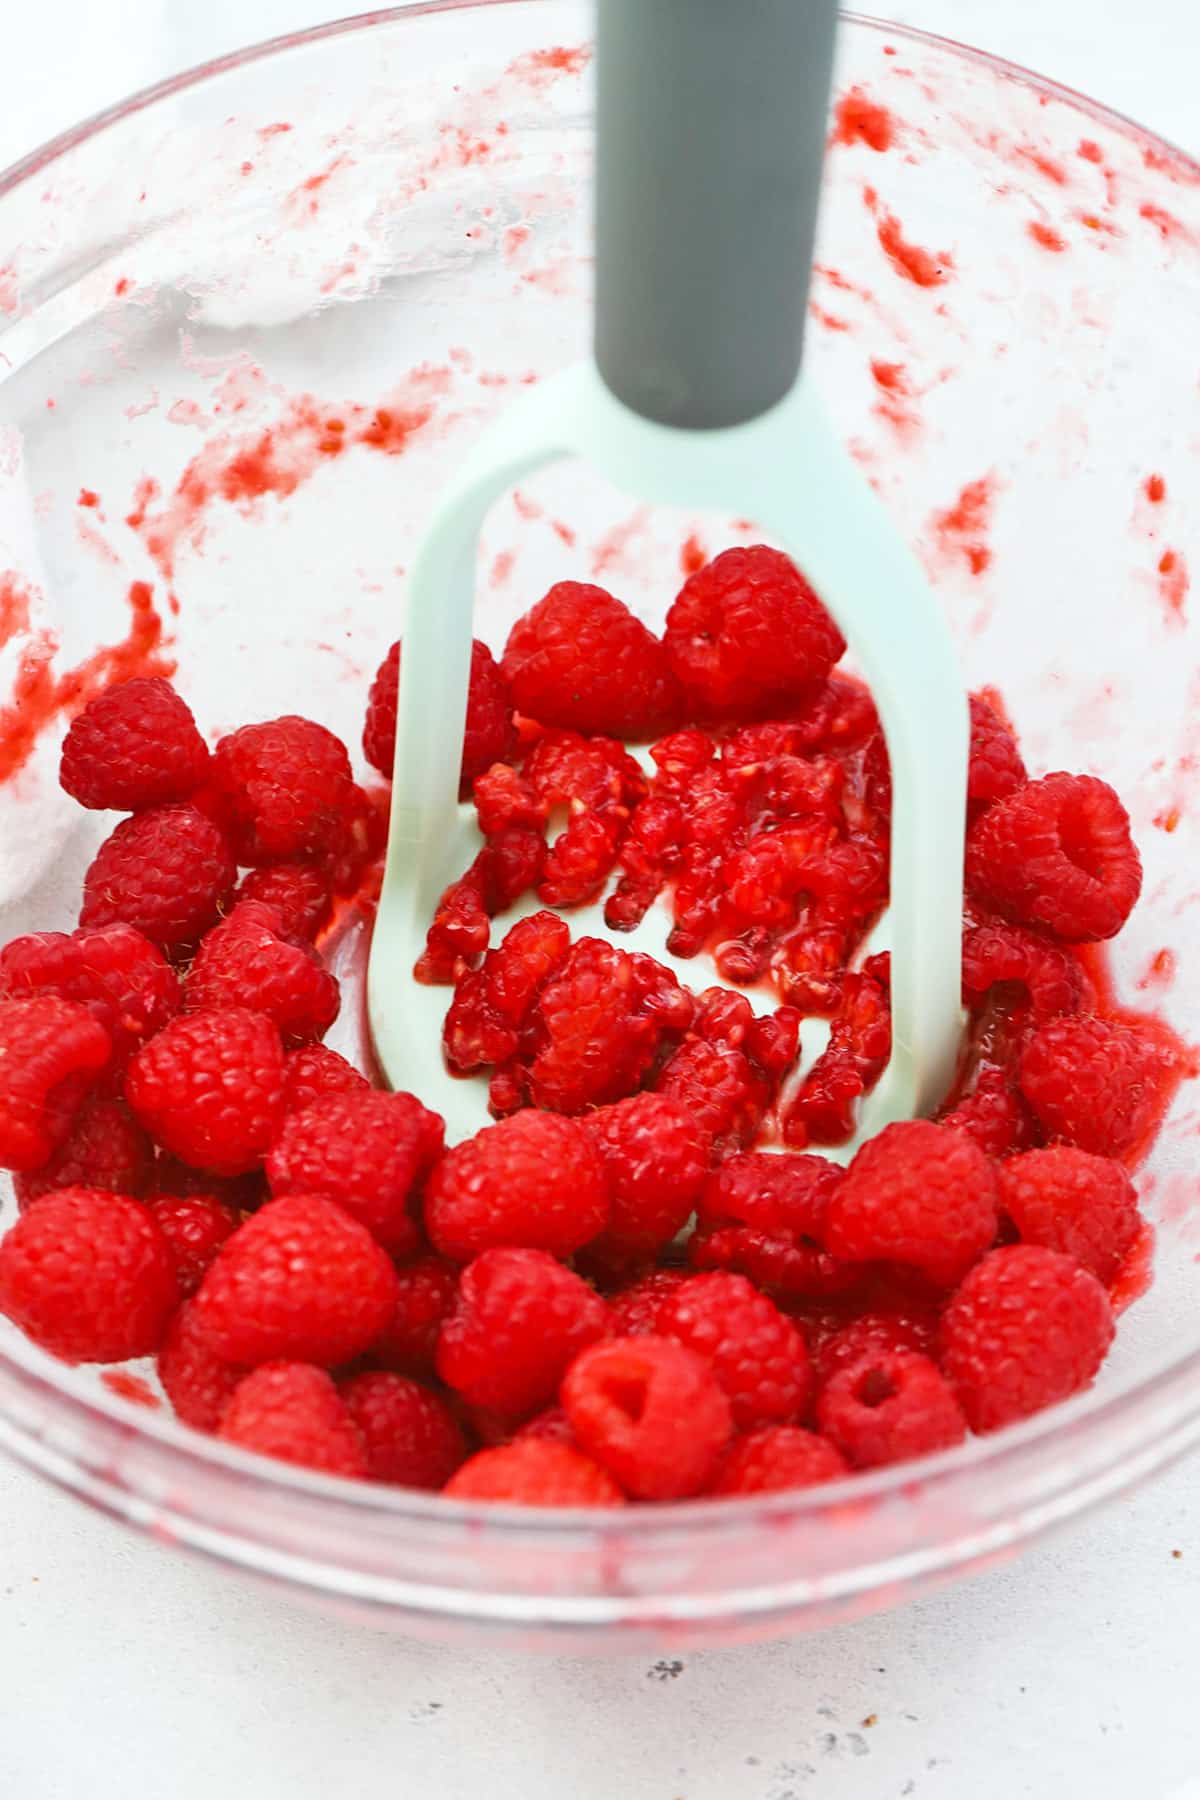 Mashing raspberries for homemade freezer jam